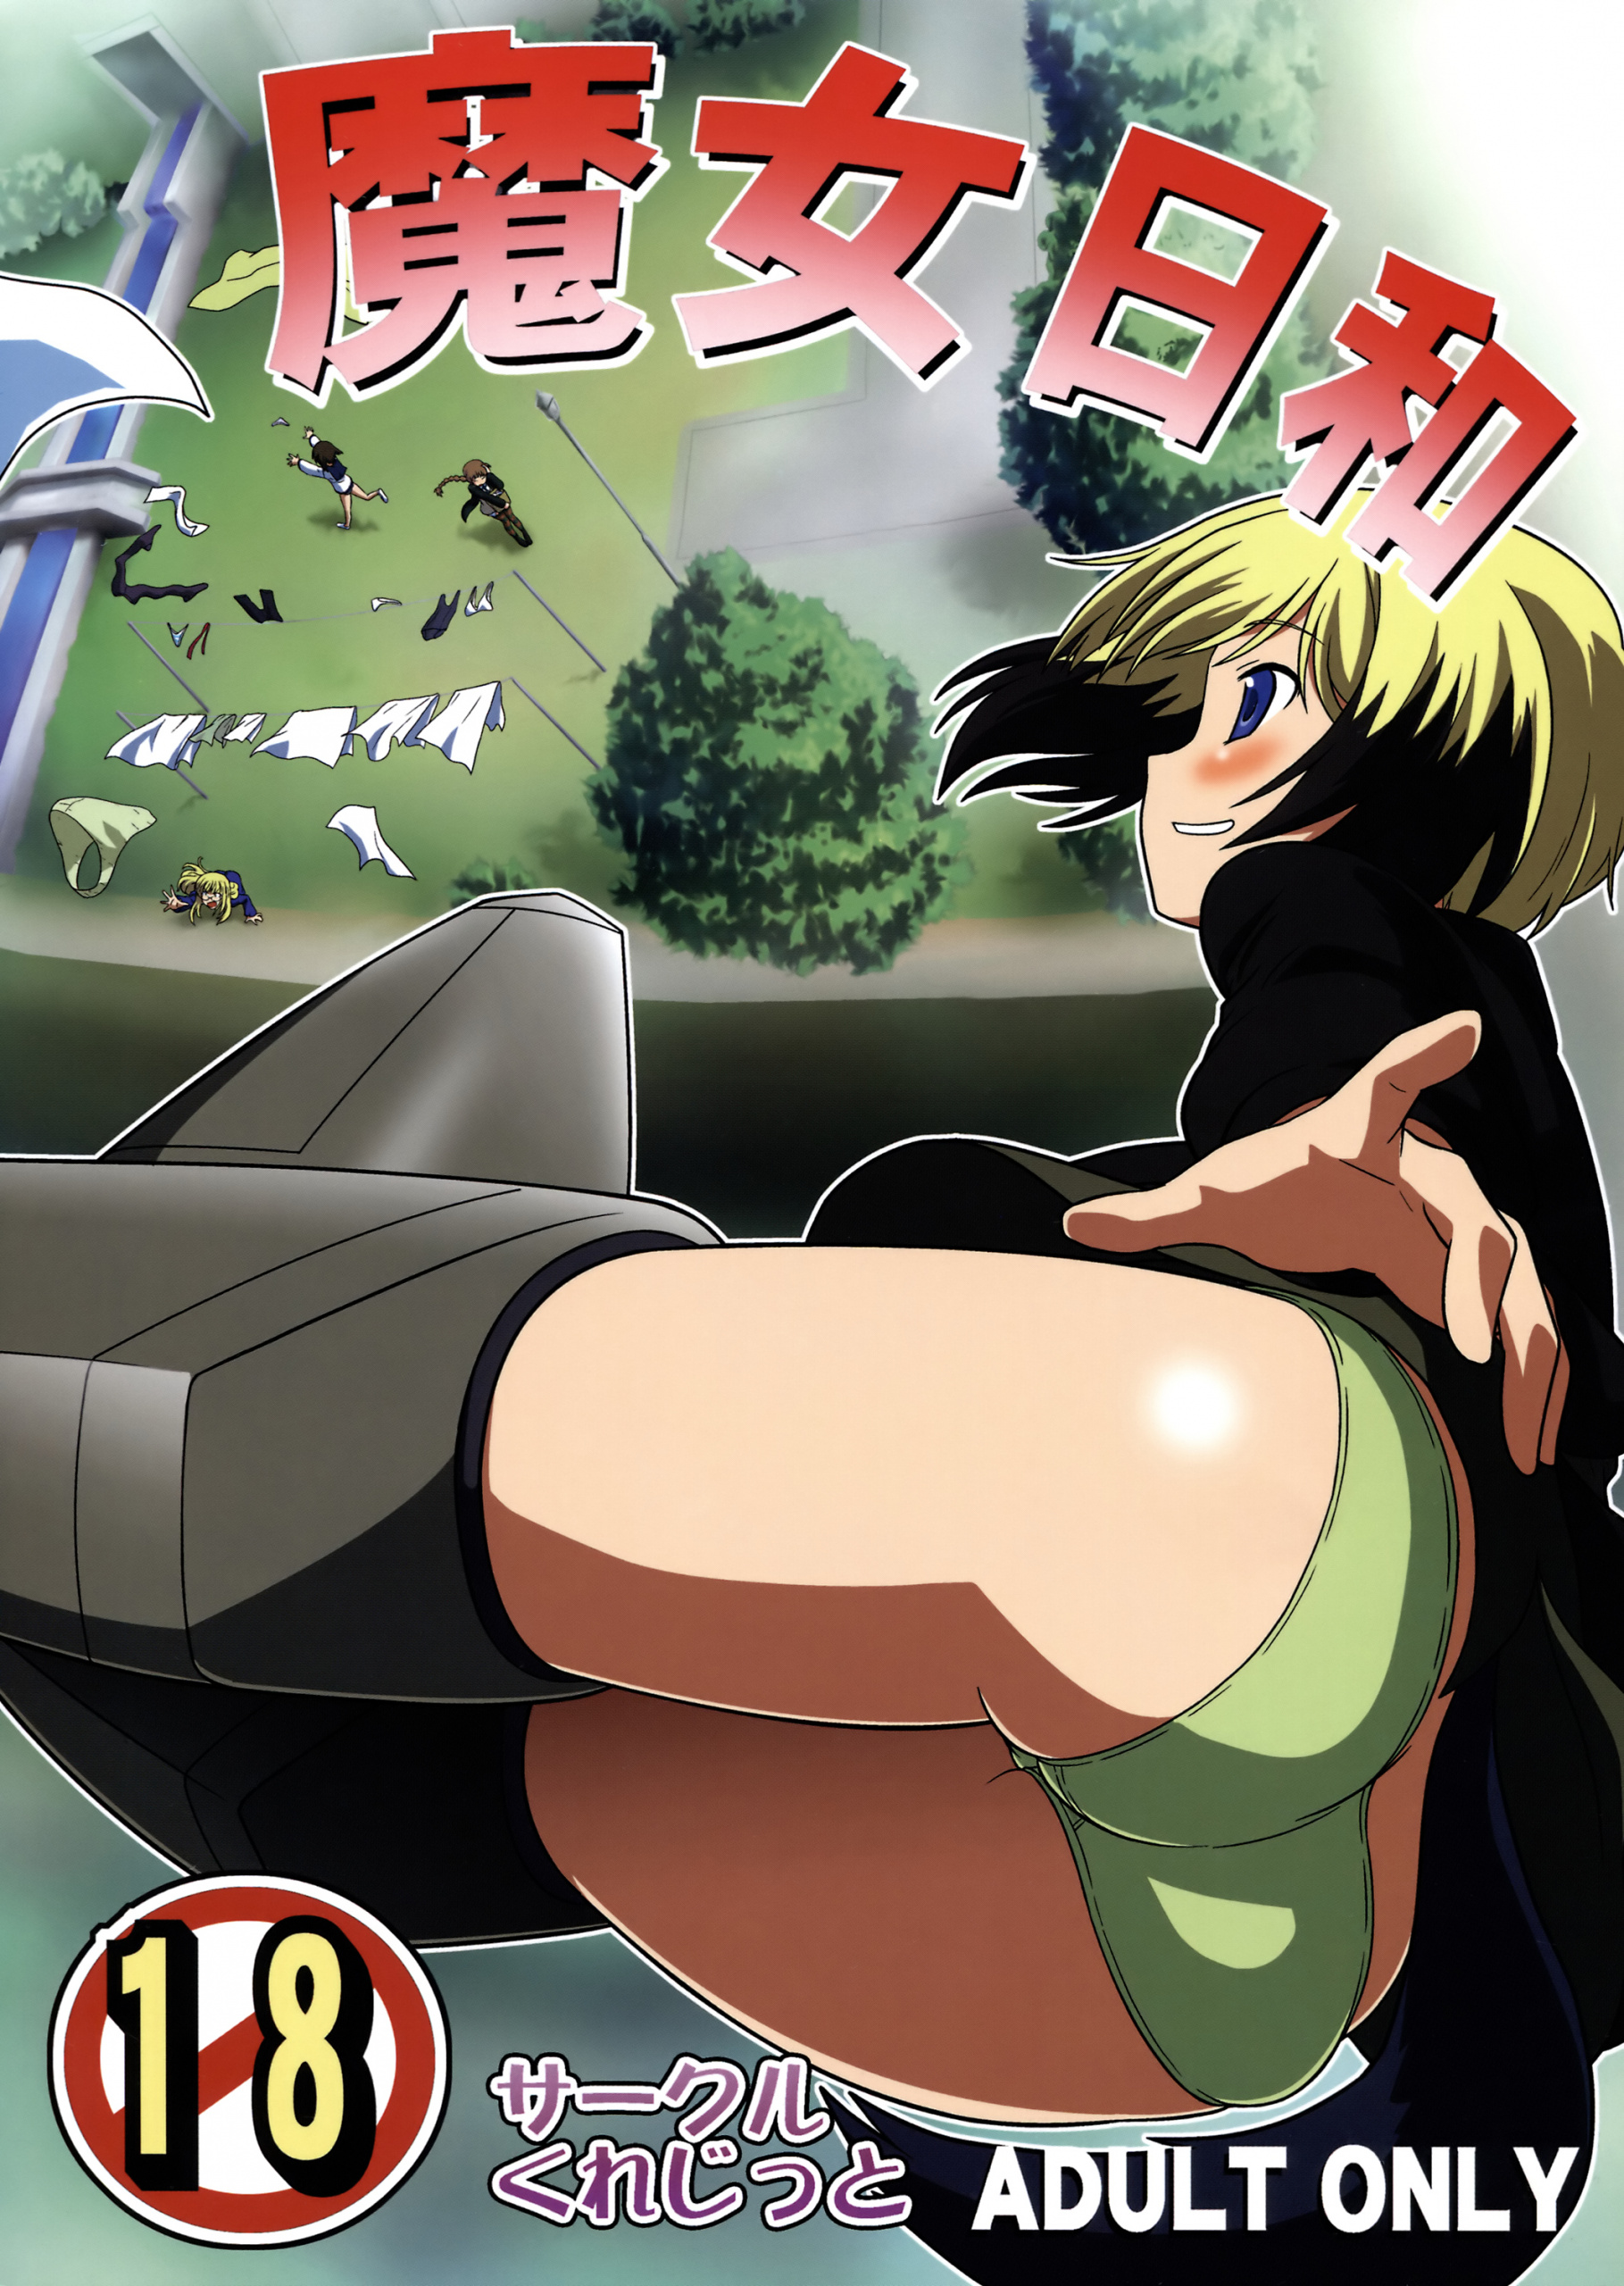 Big Tit Lesbian Hentai Games - Yuri: Girls daily games - Multporn Comics & Hentai manga